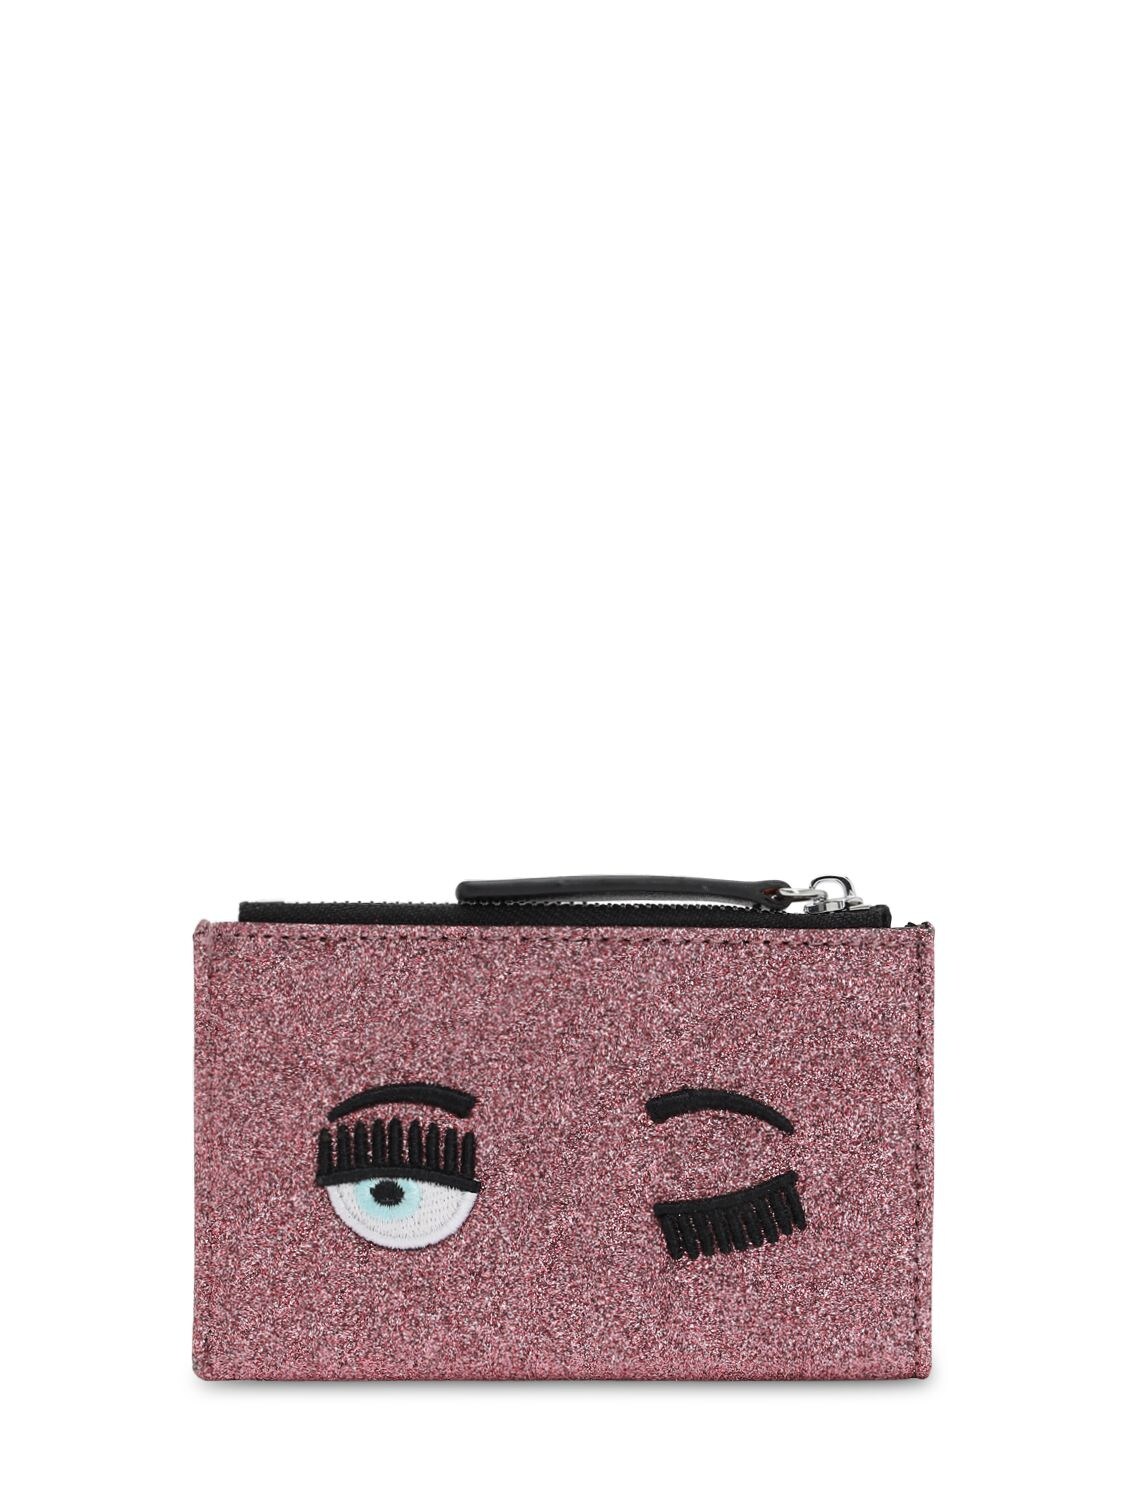 Chiara Ferragni Flirting Eye Glittered Card Holder In Pink